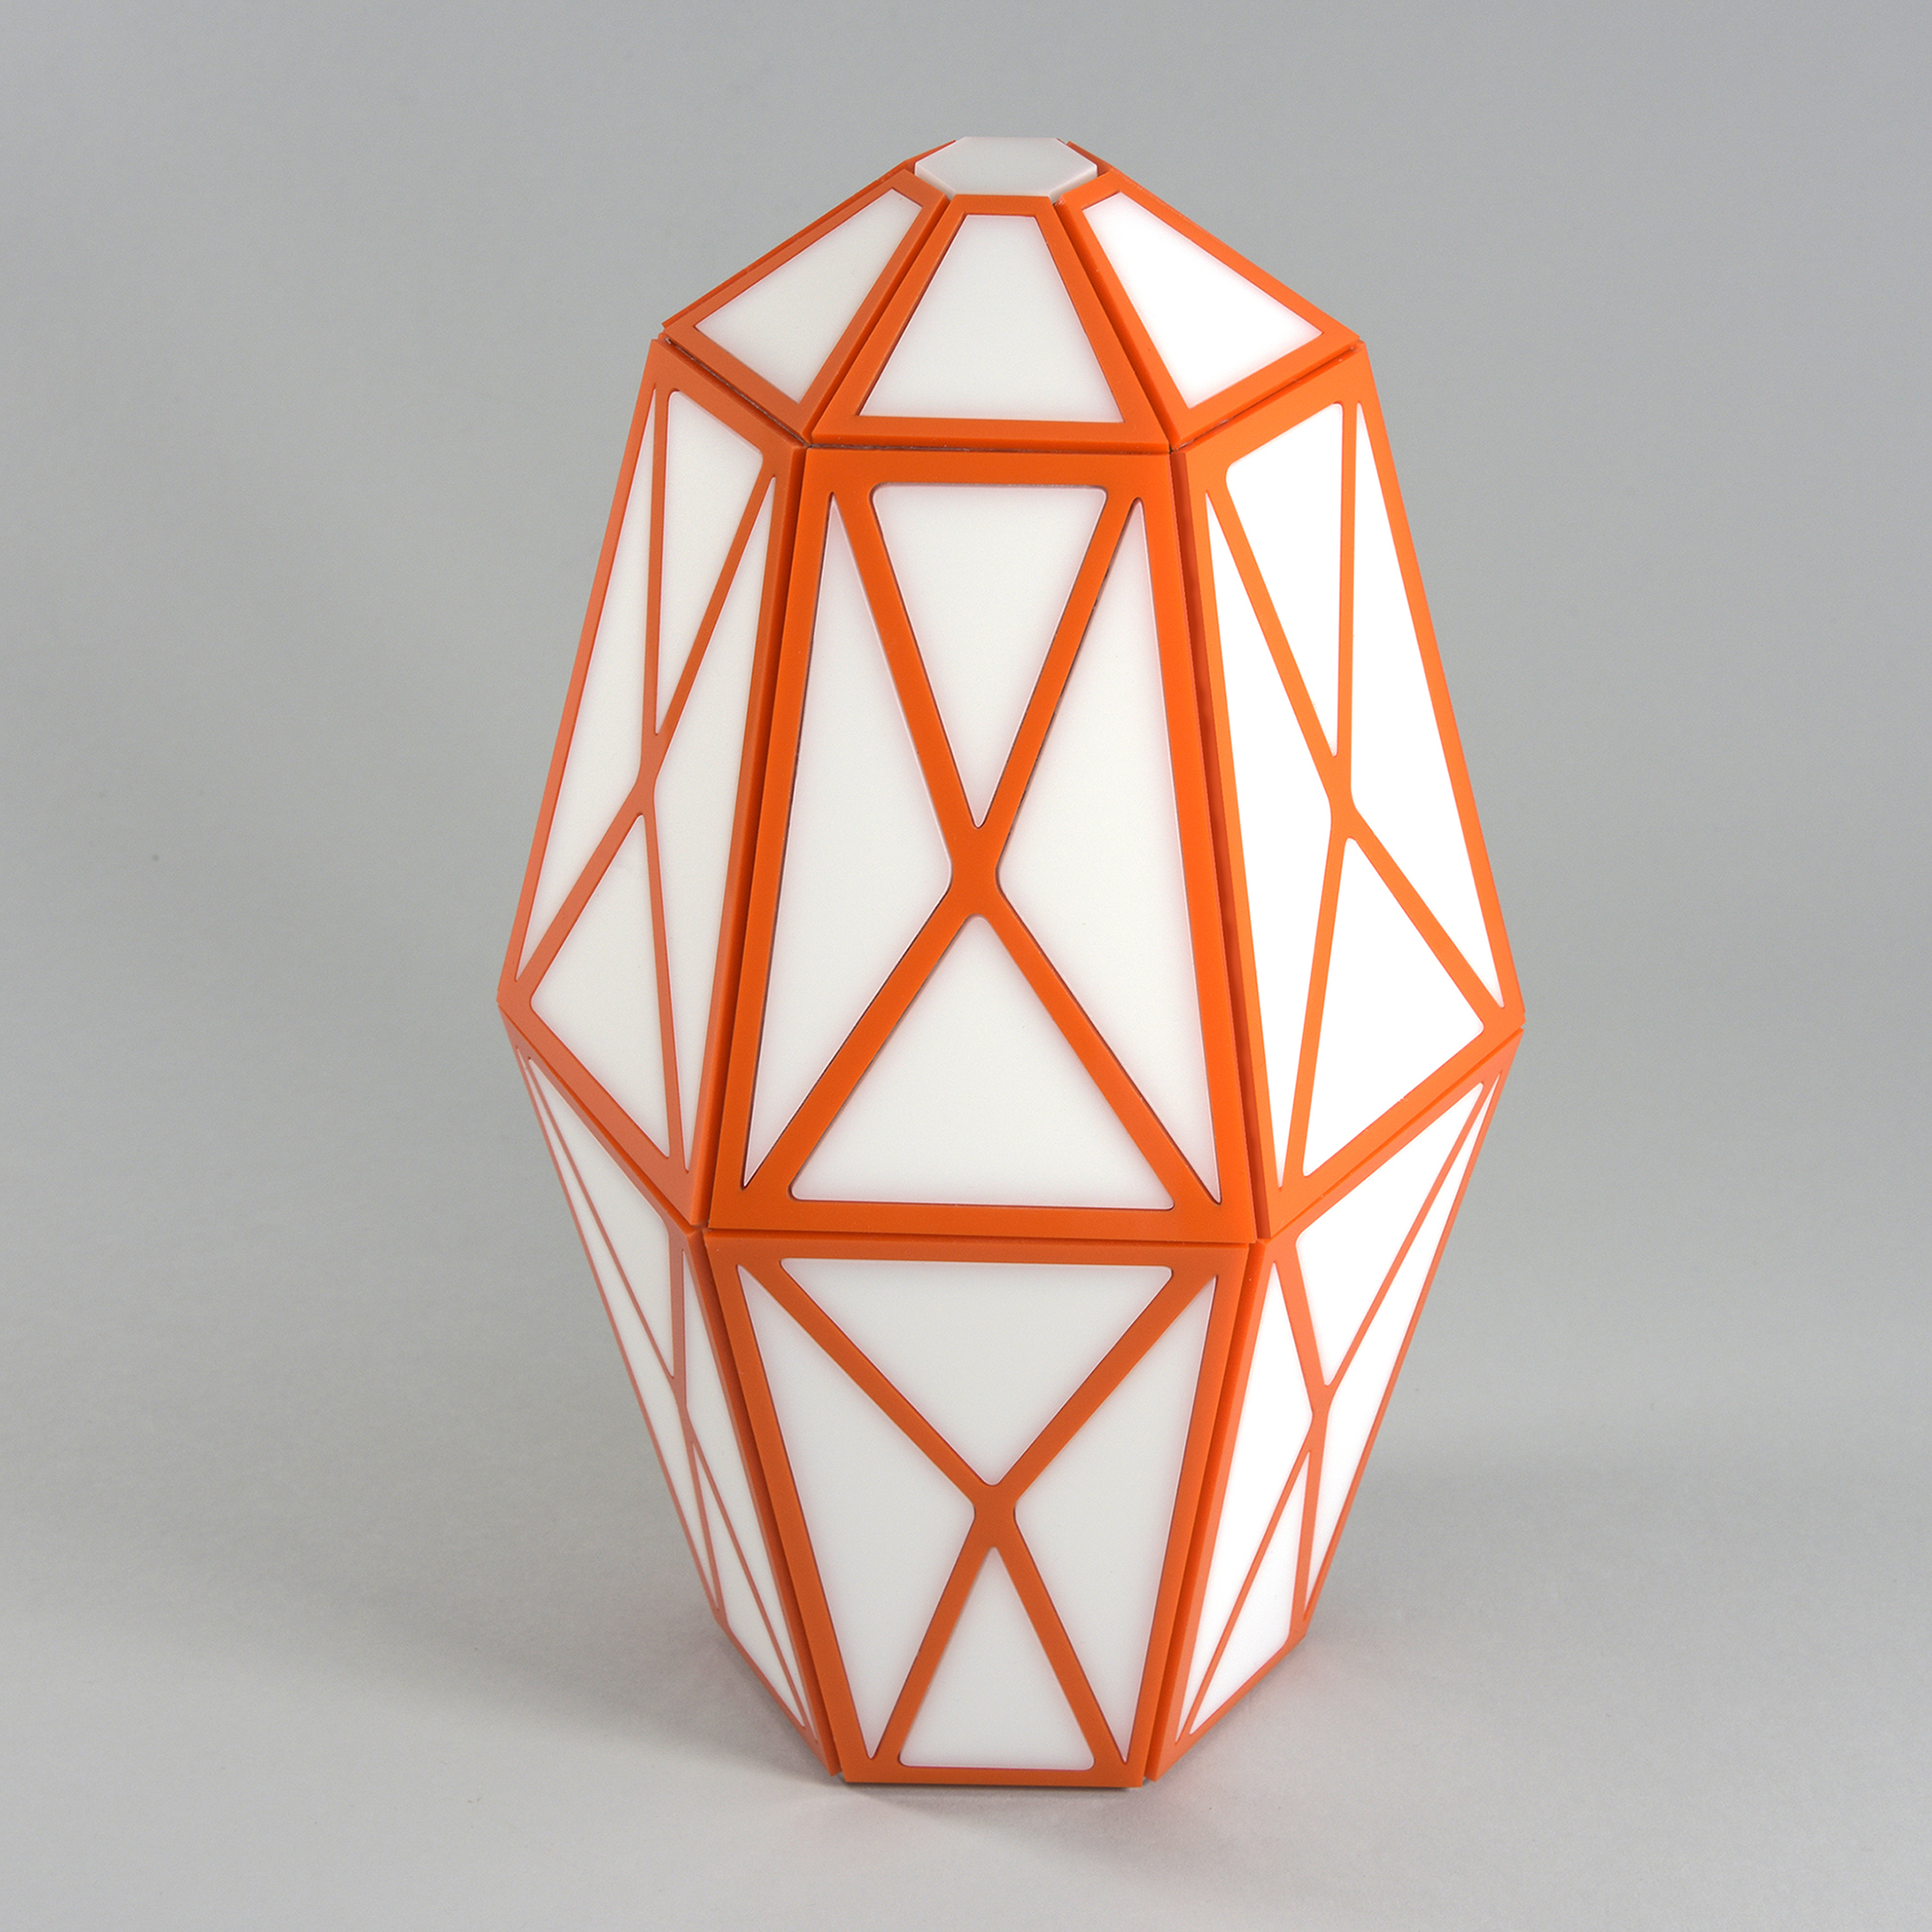 Vase (2017) by Stephen Hendee, sculpture